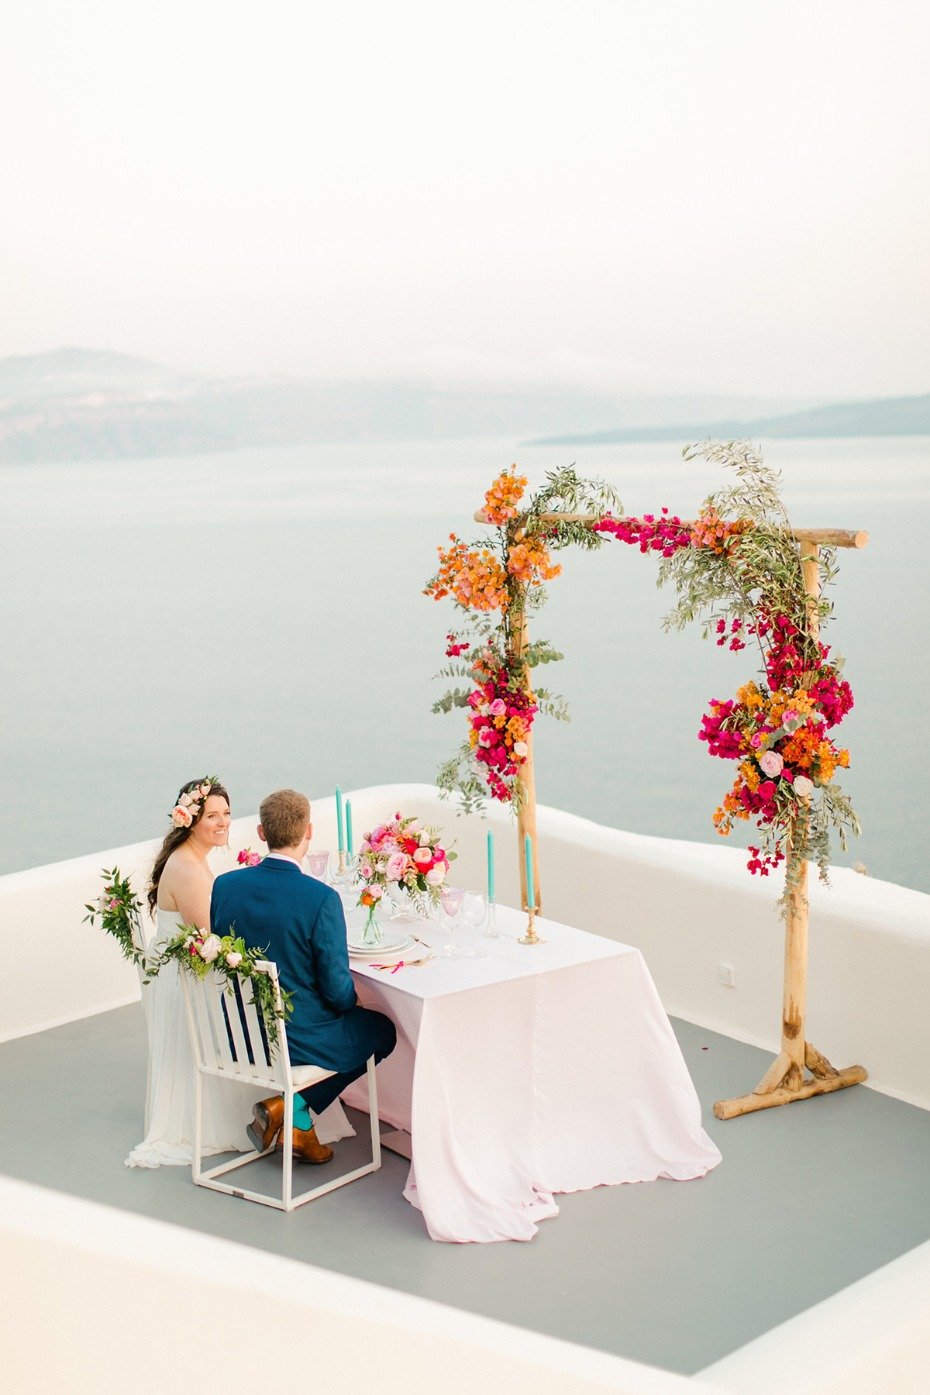 Romantic wedding dinner in Santorini